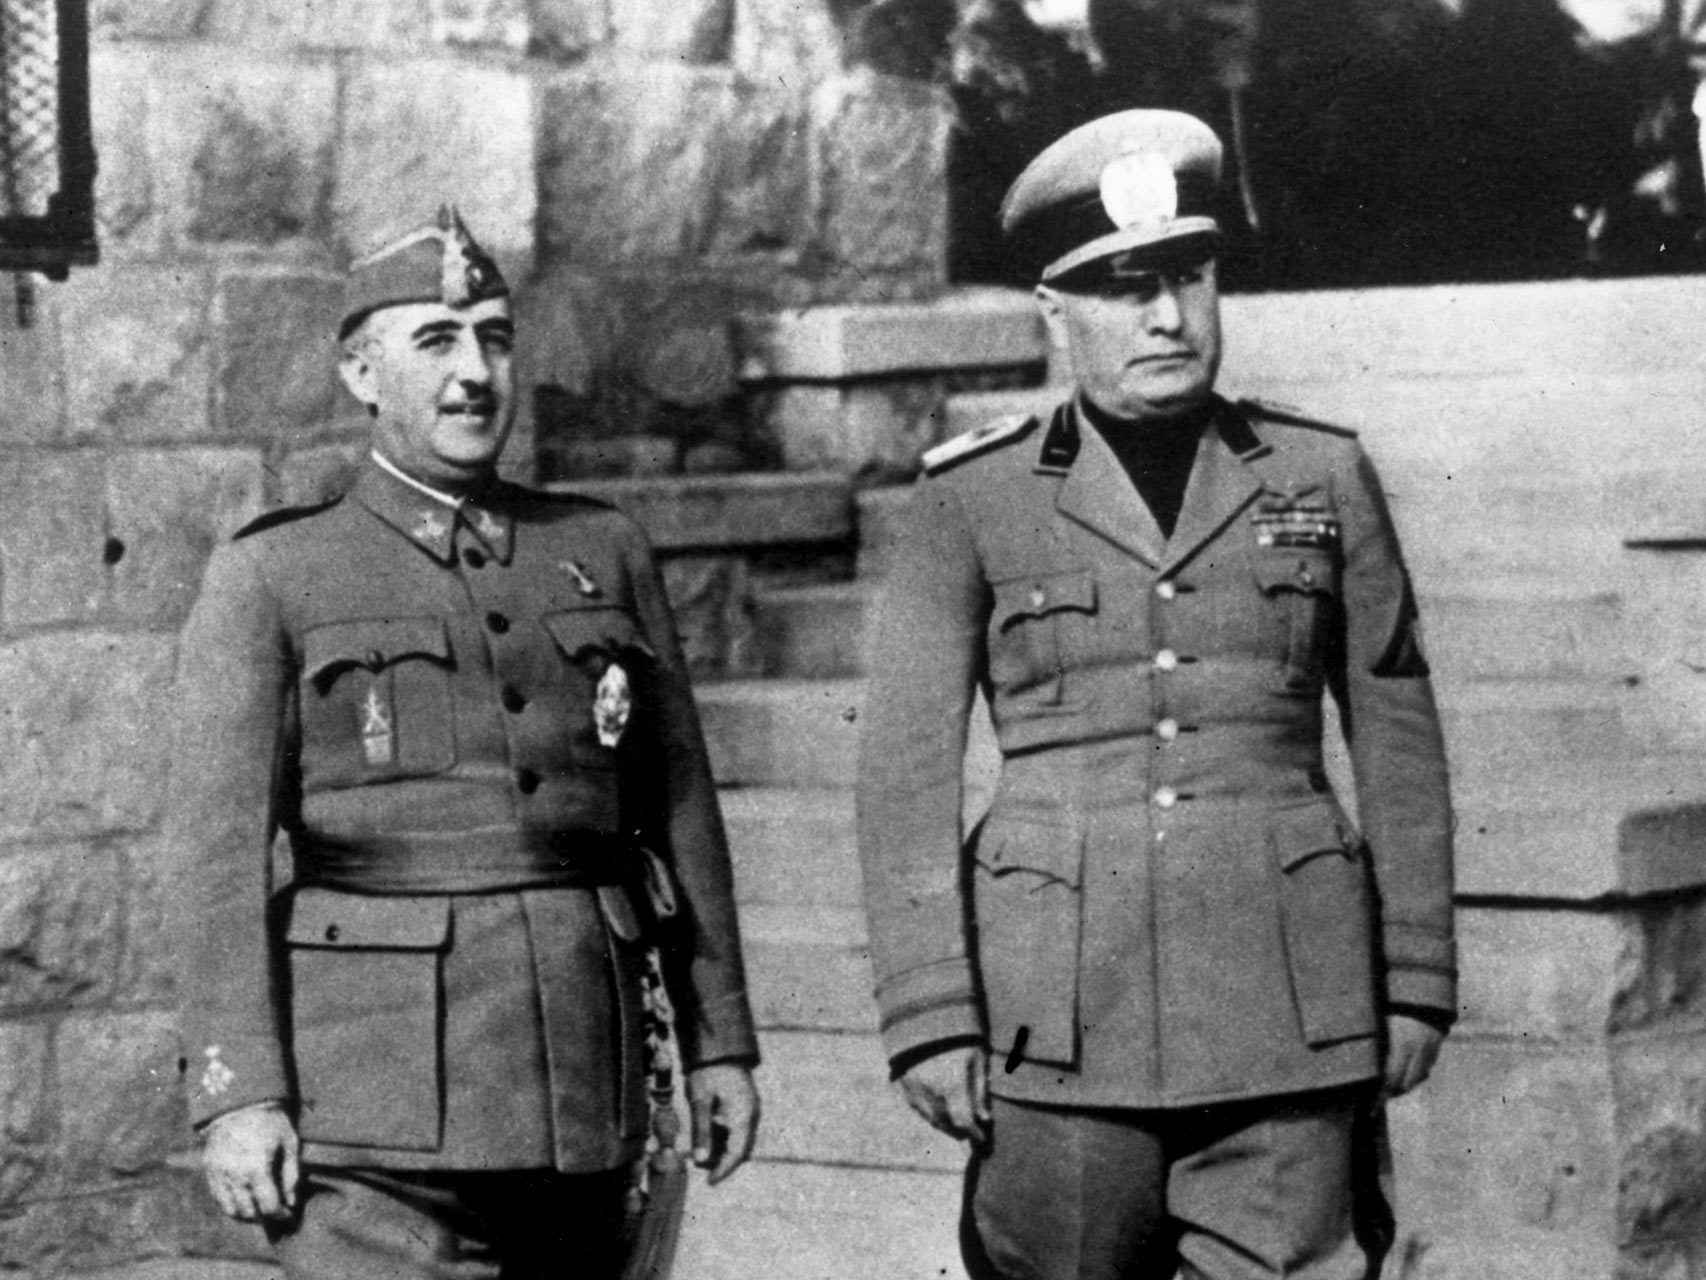 Francisco Franco acompañado de Benito Mussolini